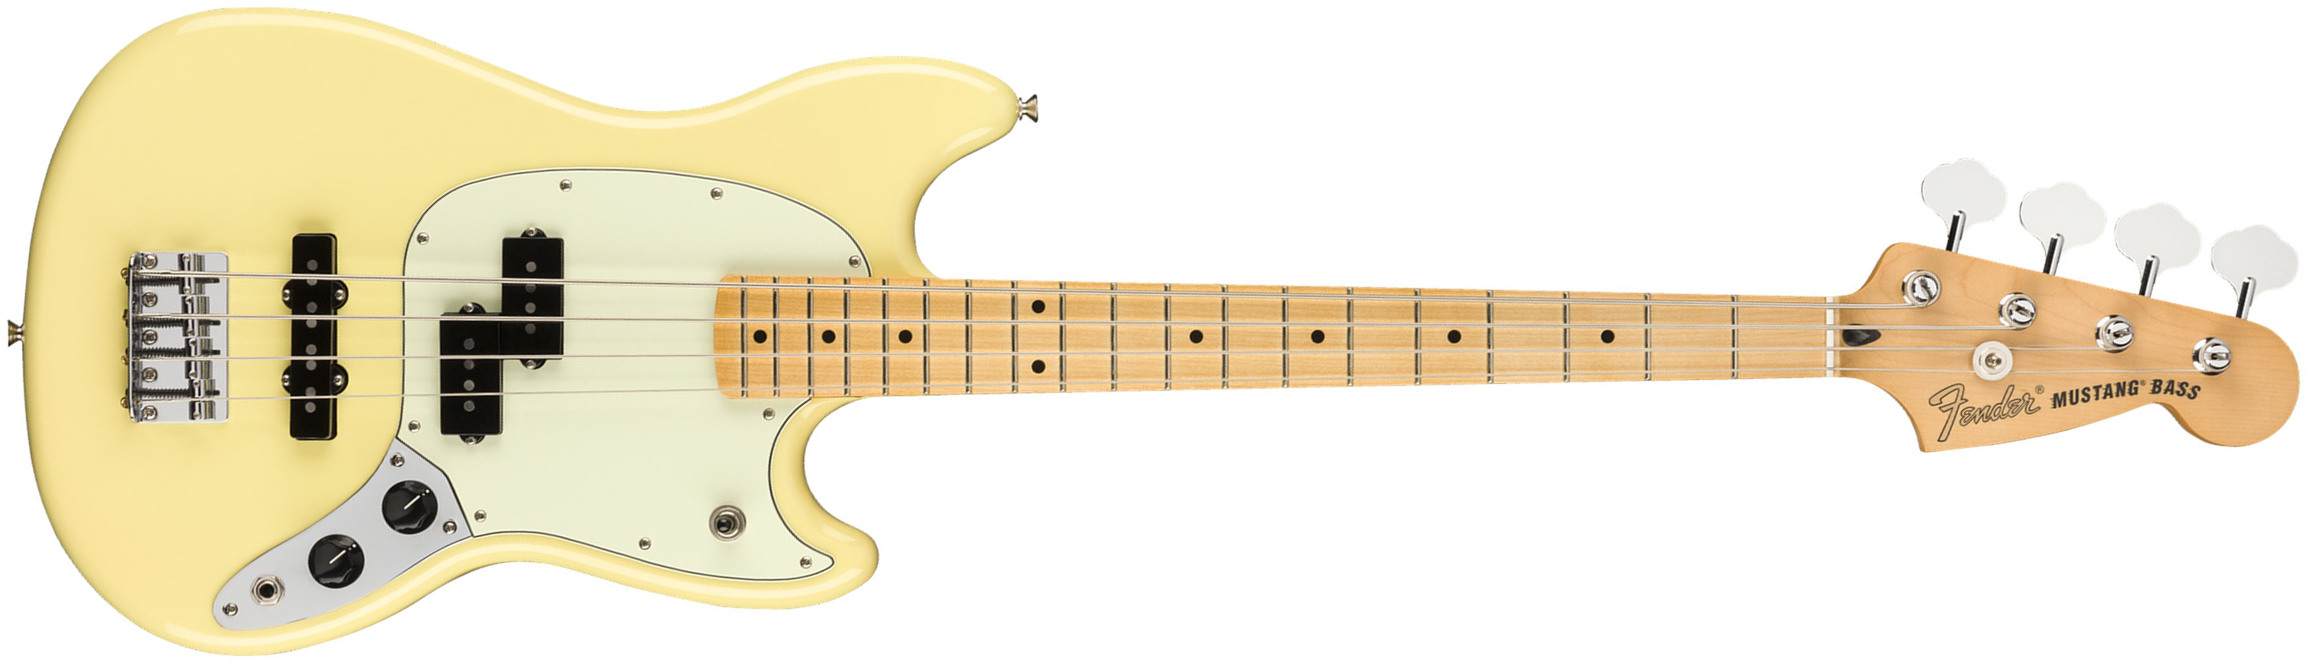 Fender Player Mustang Bass Pj Ltd Mex Mn - Canary - Bajo eléctrico de cuerpo sólido - Main picture